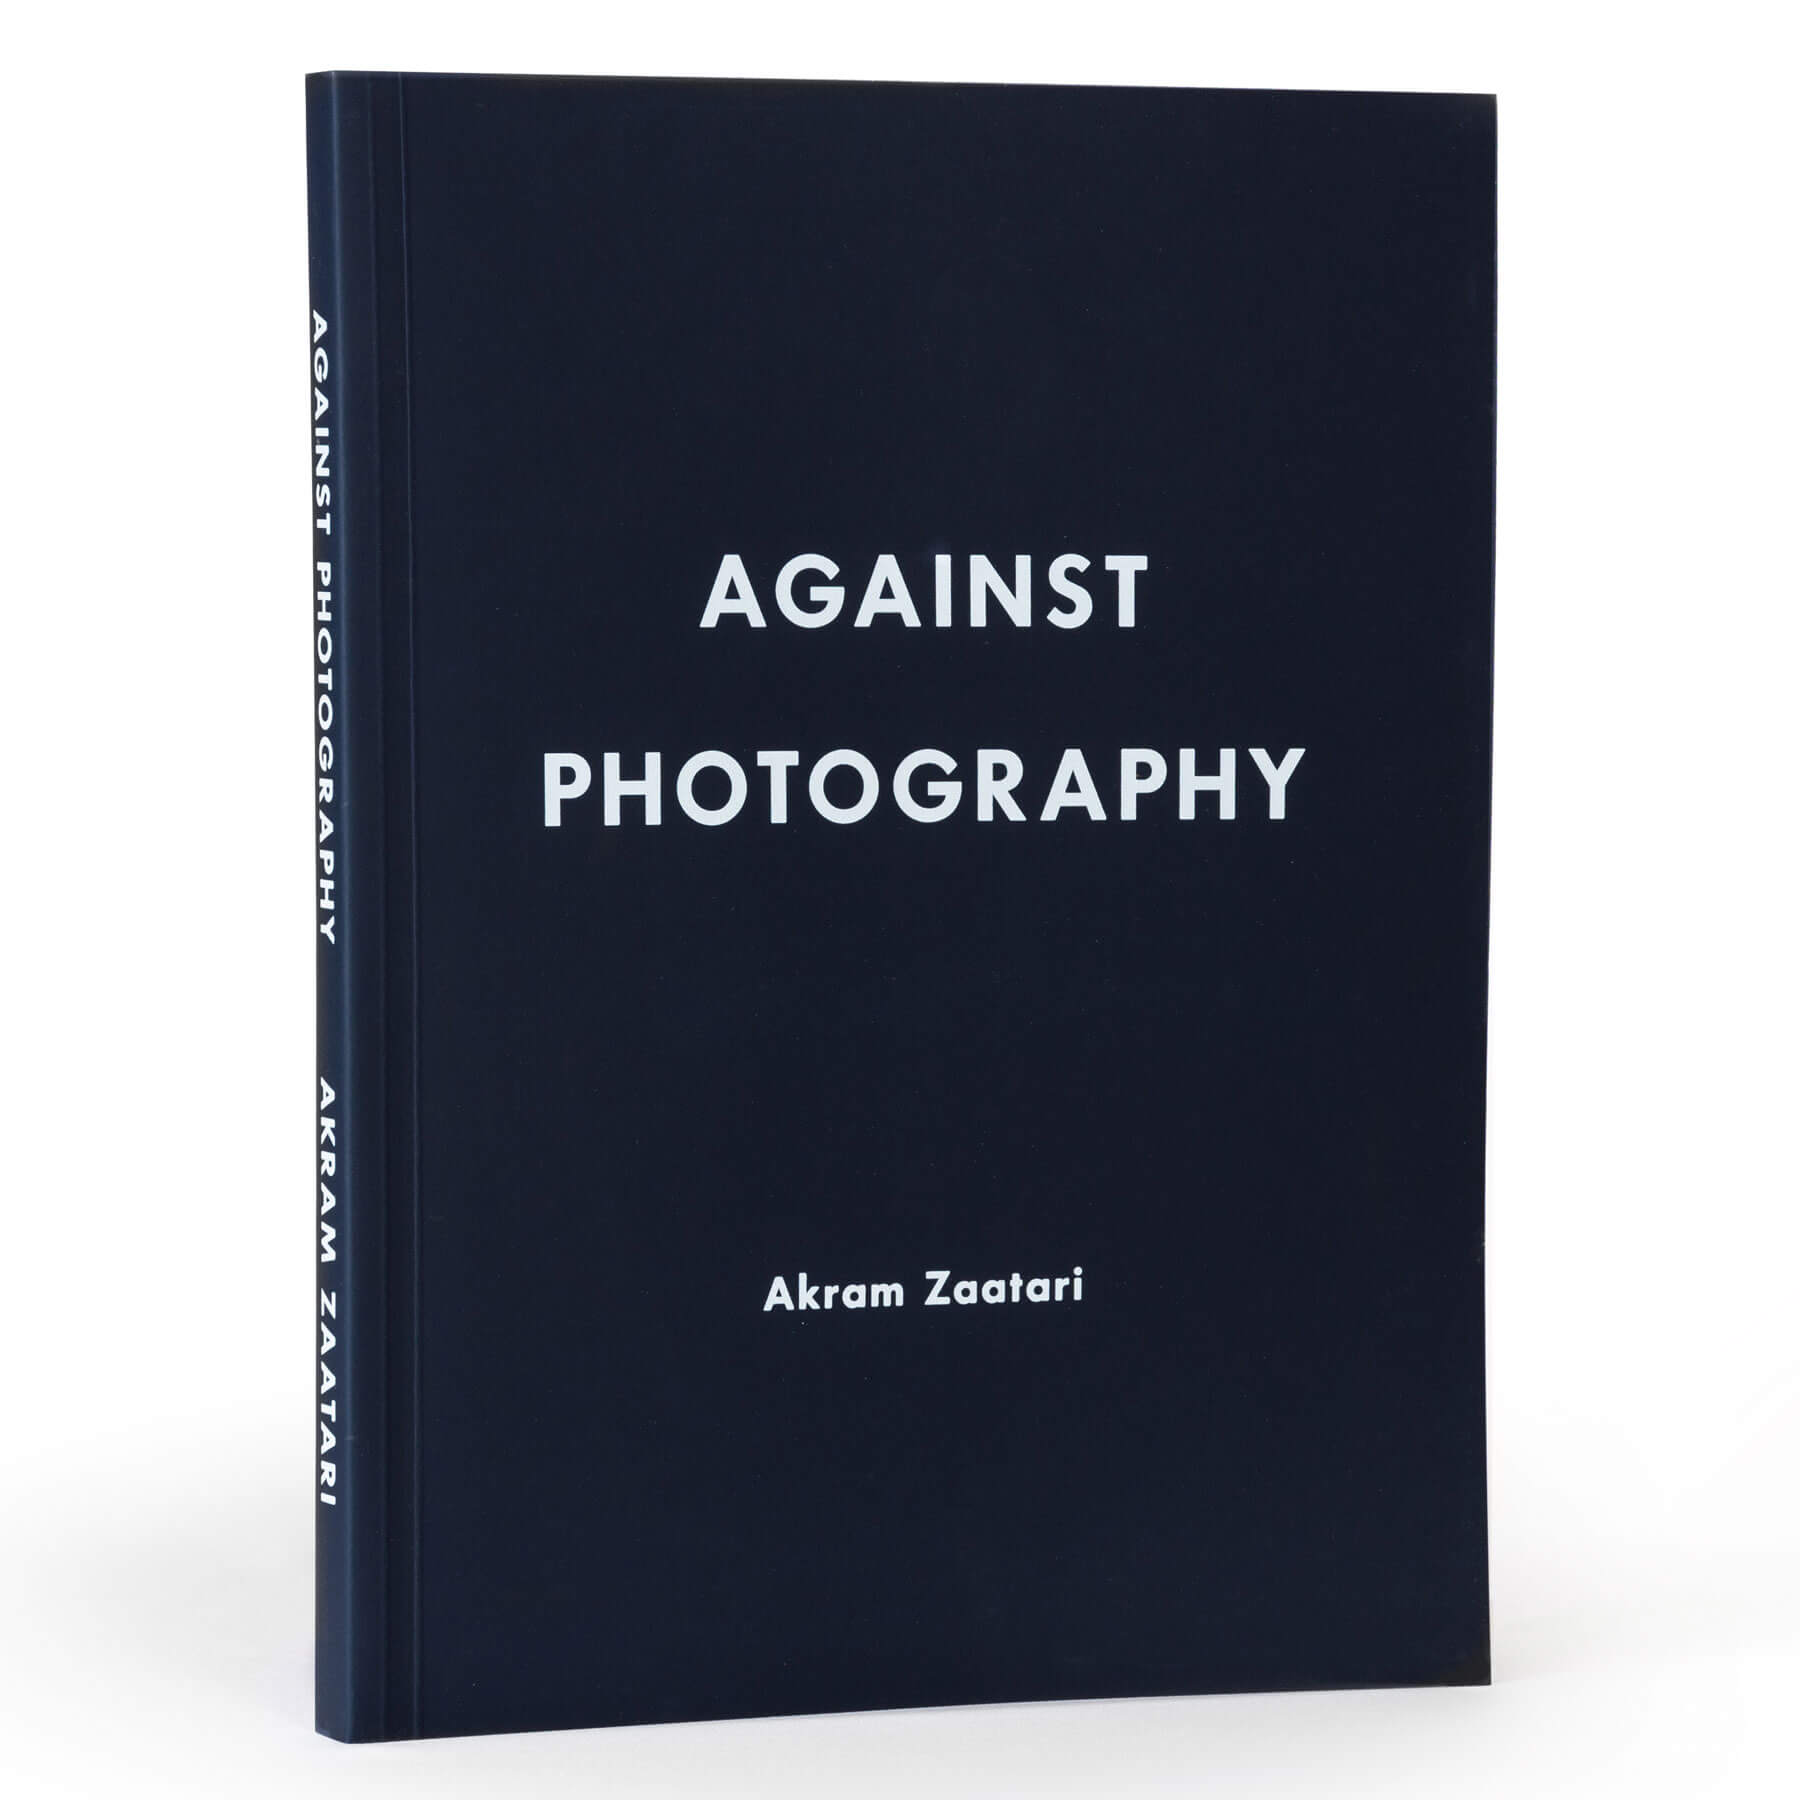 Akram Zaatari | "Against Photography"